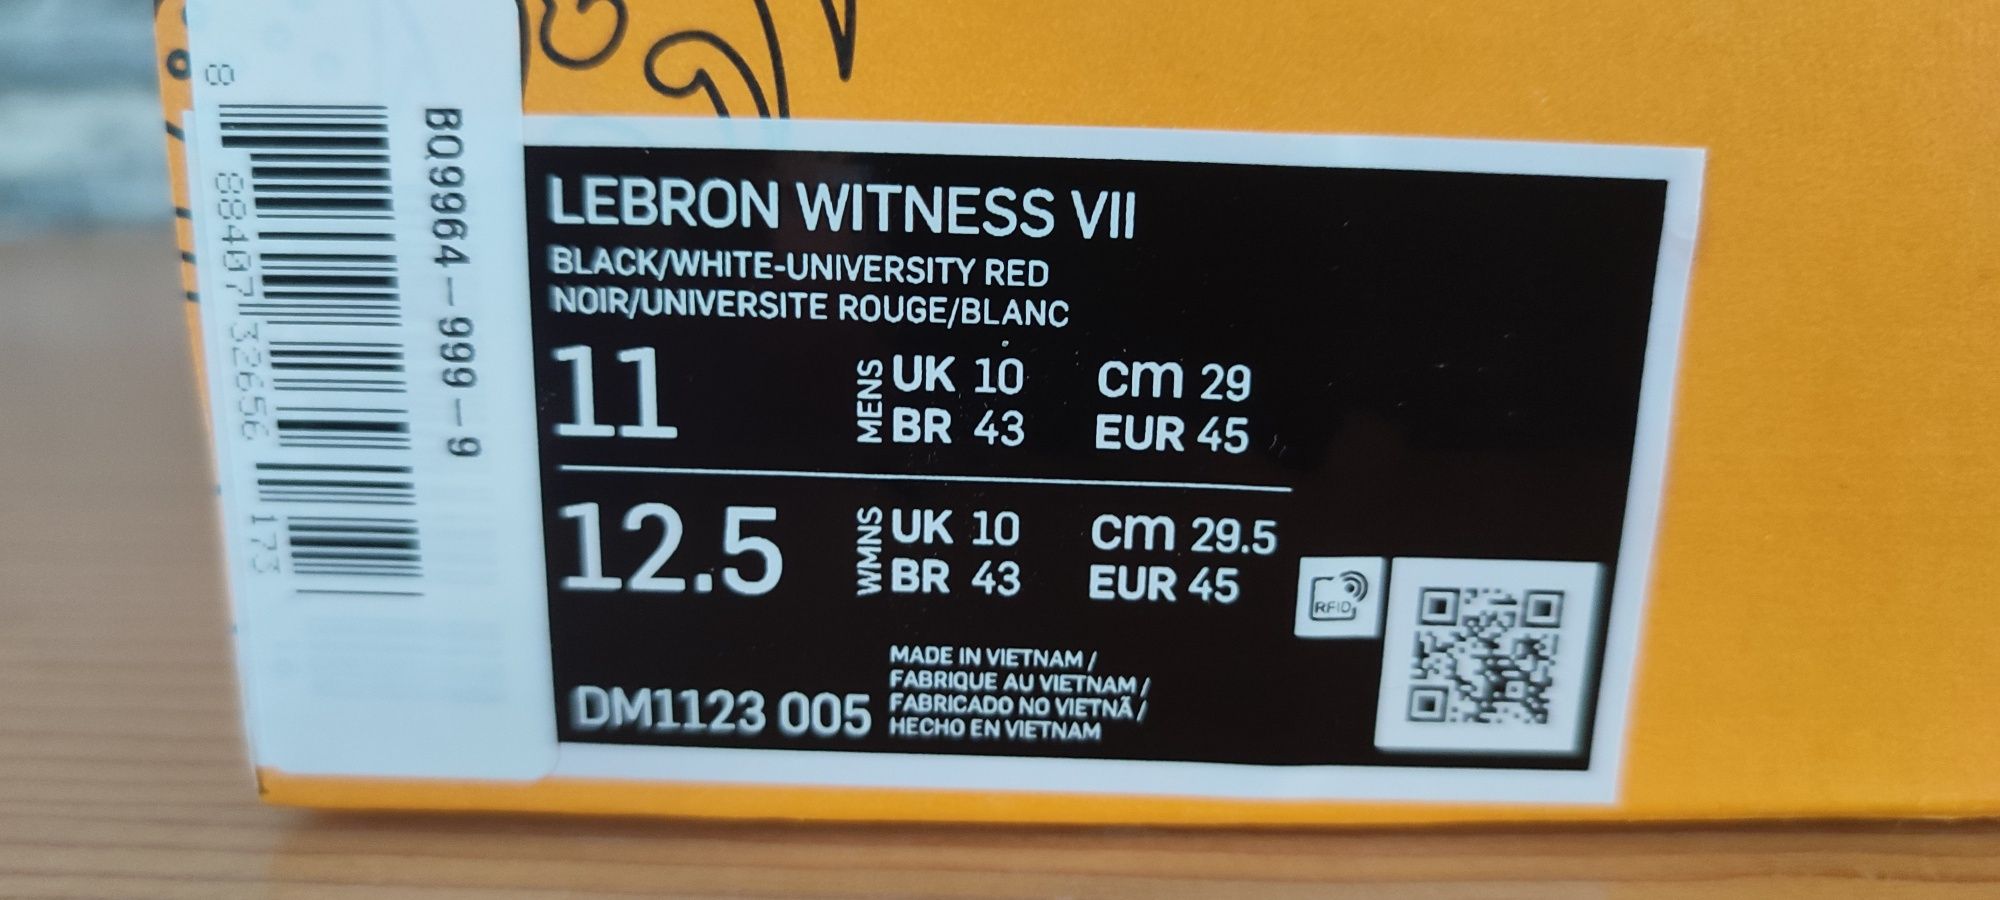 Nike LeBron witness VII EUR 45 29cm